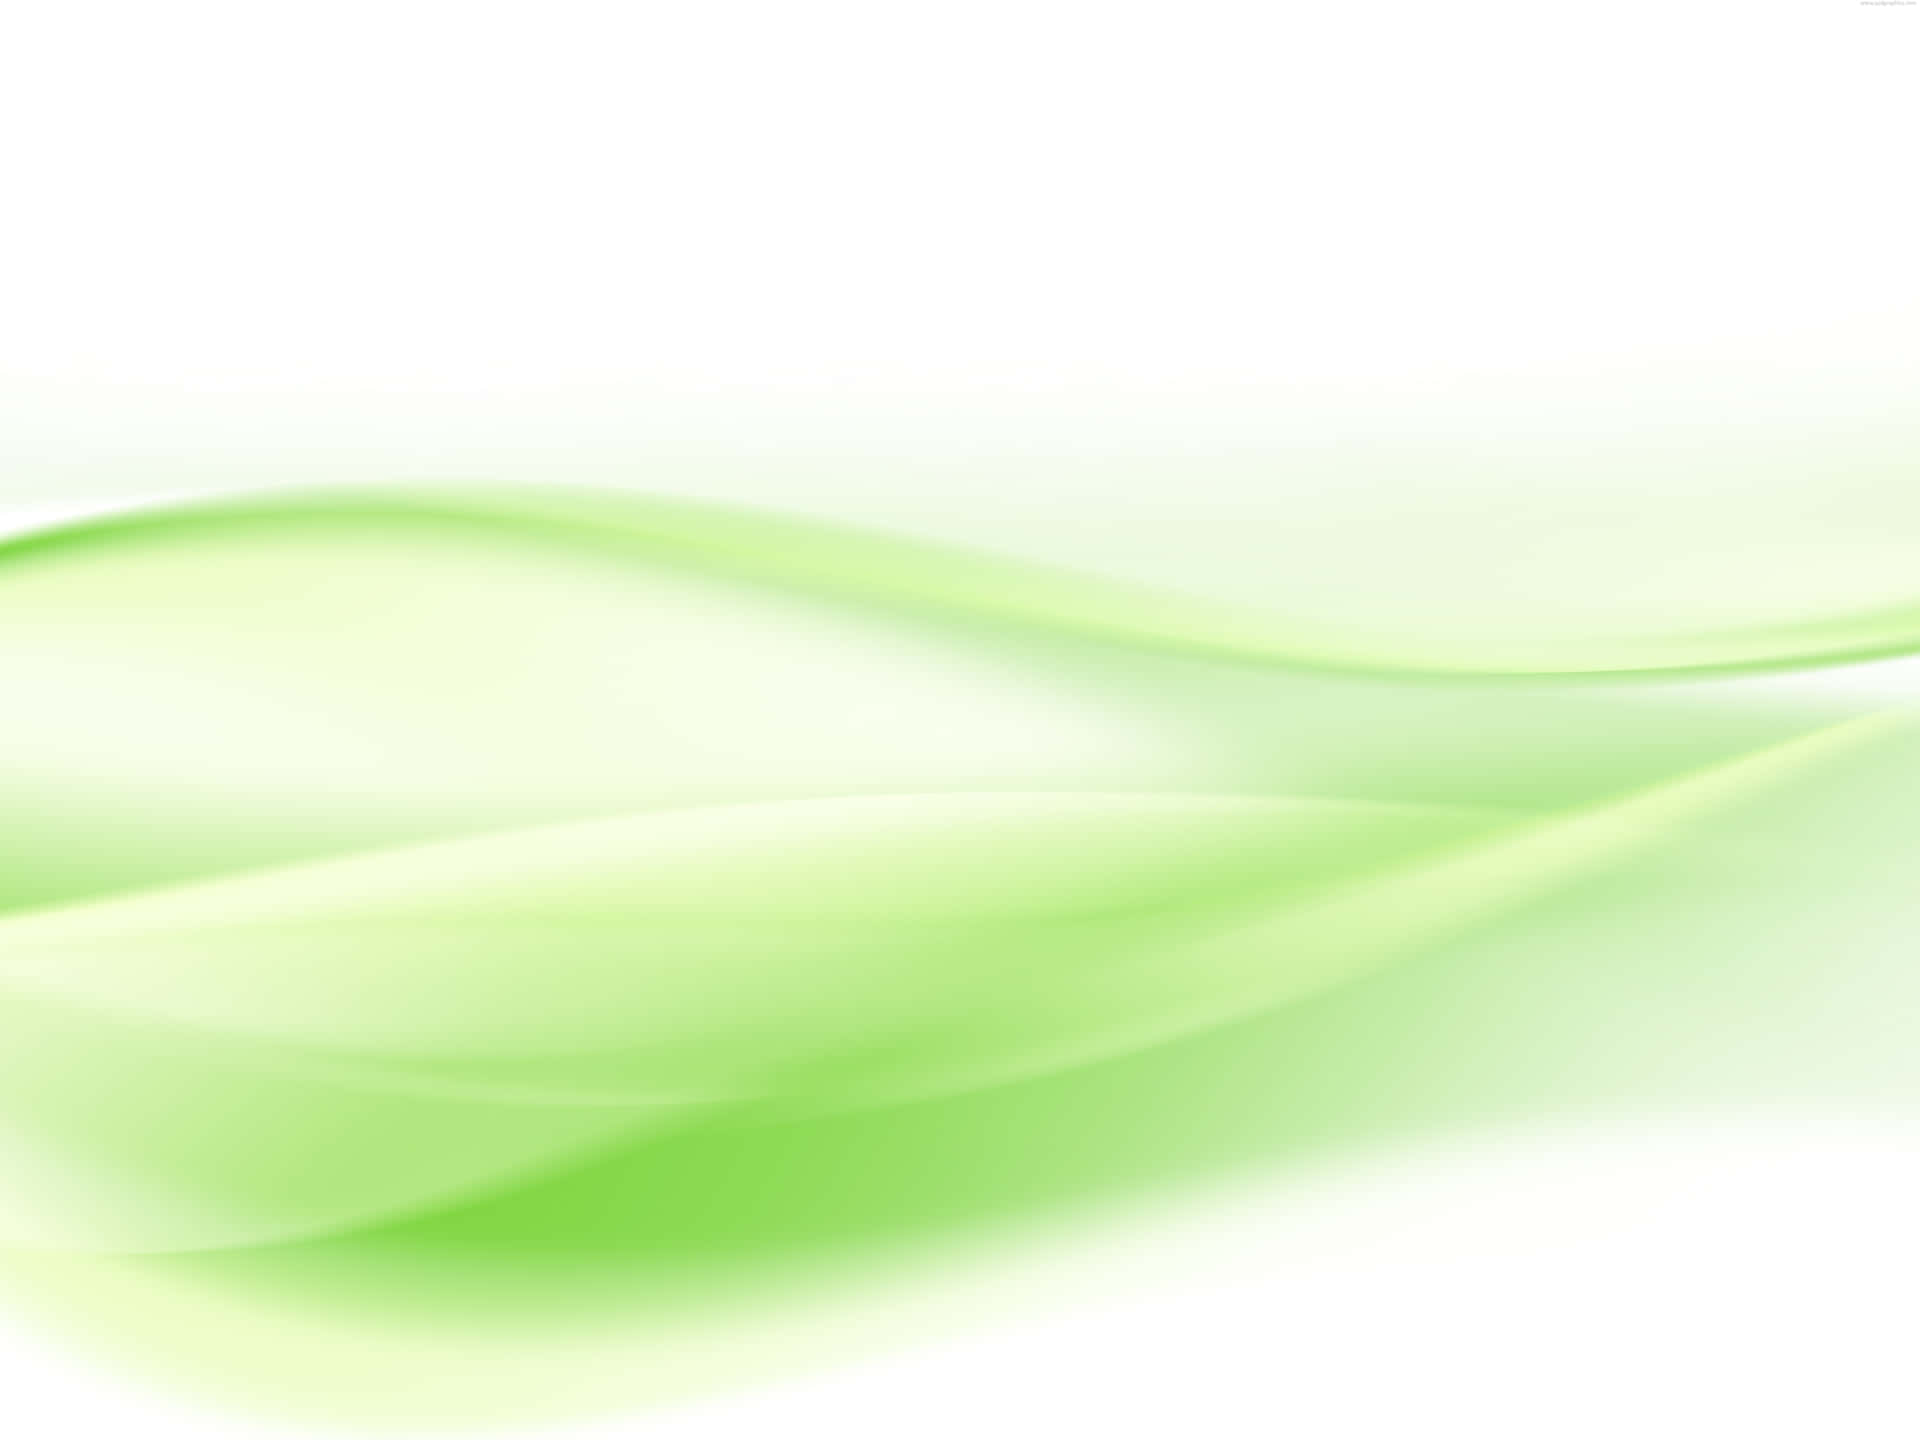 Light Green Wave Vector Background